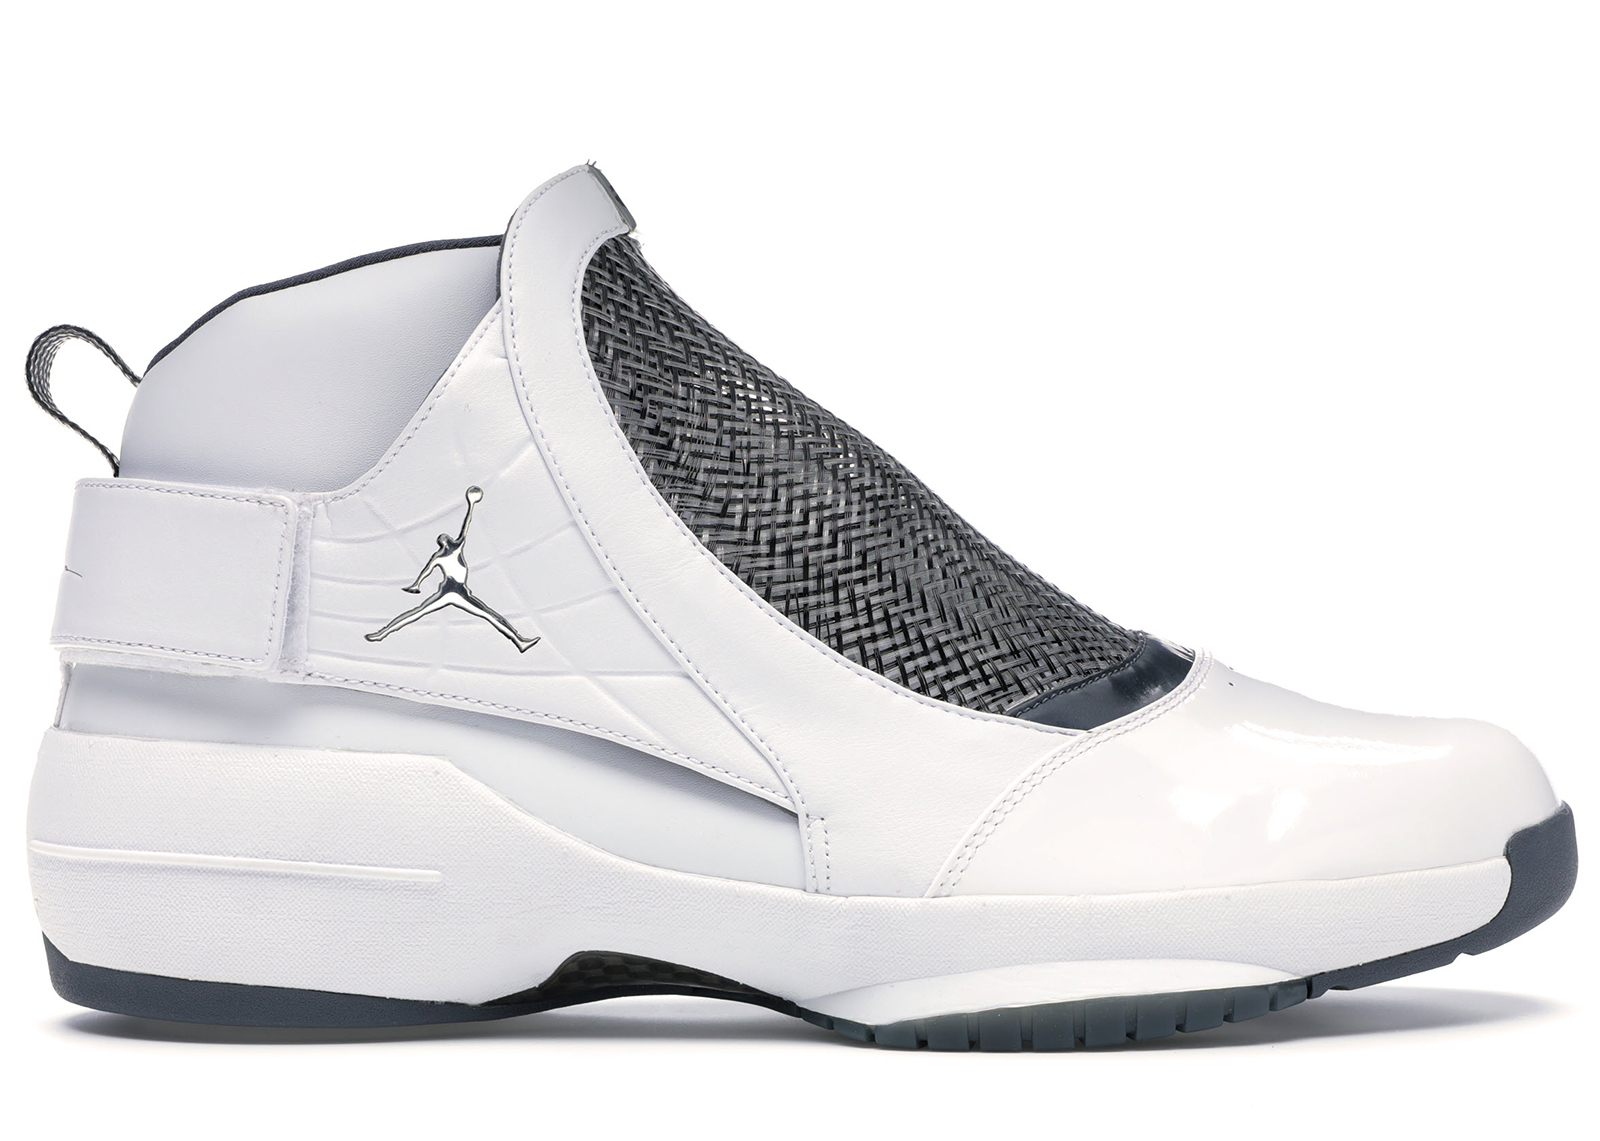 Acheter Air Jordan 19 Chaussures et sneakers neuves